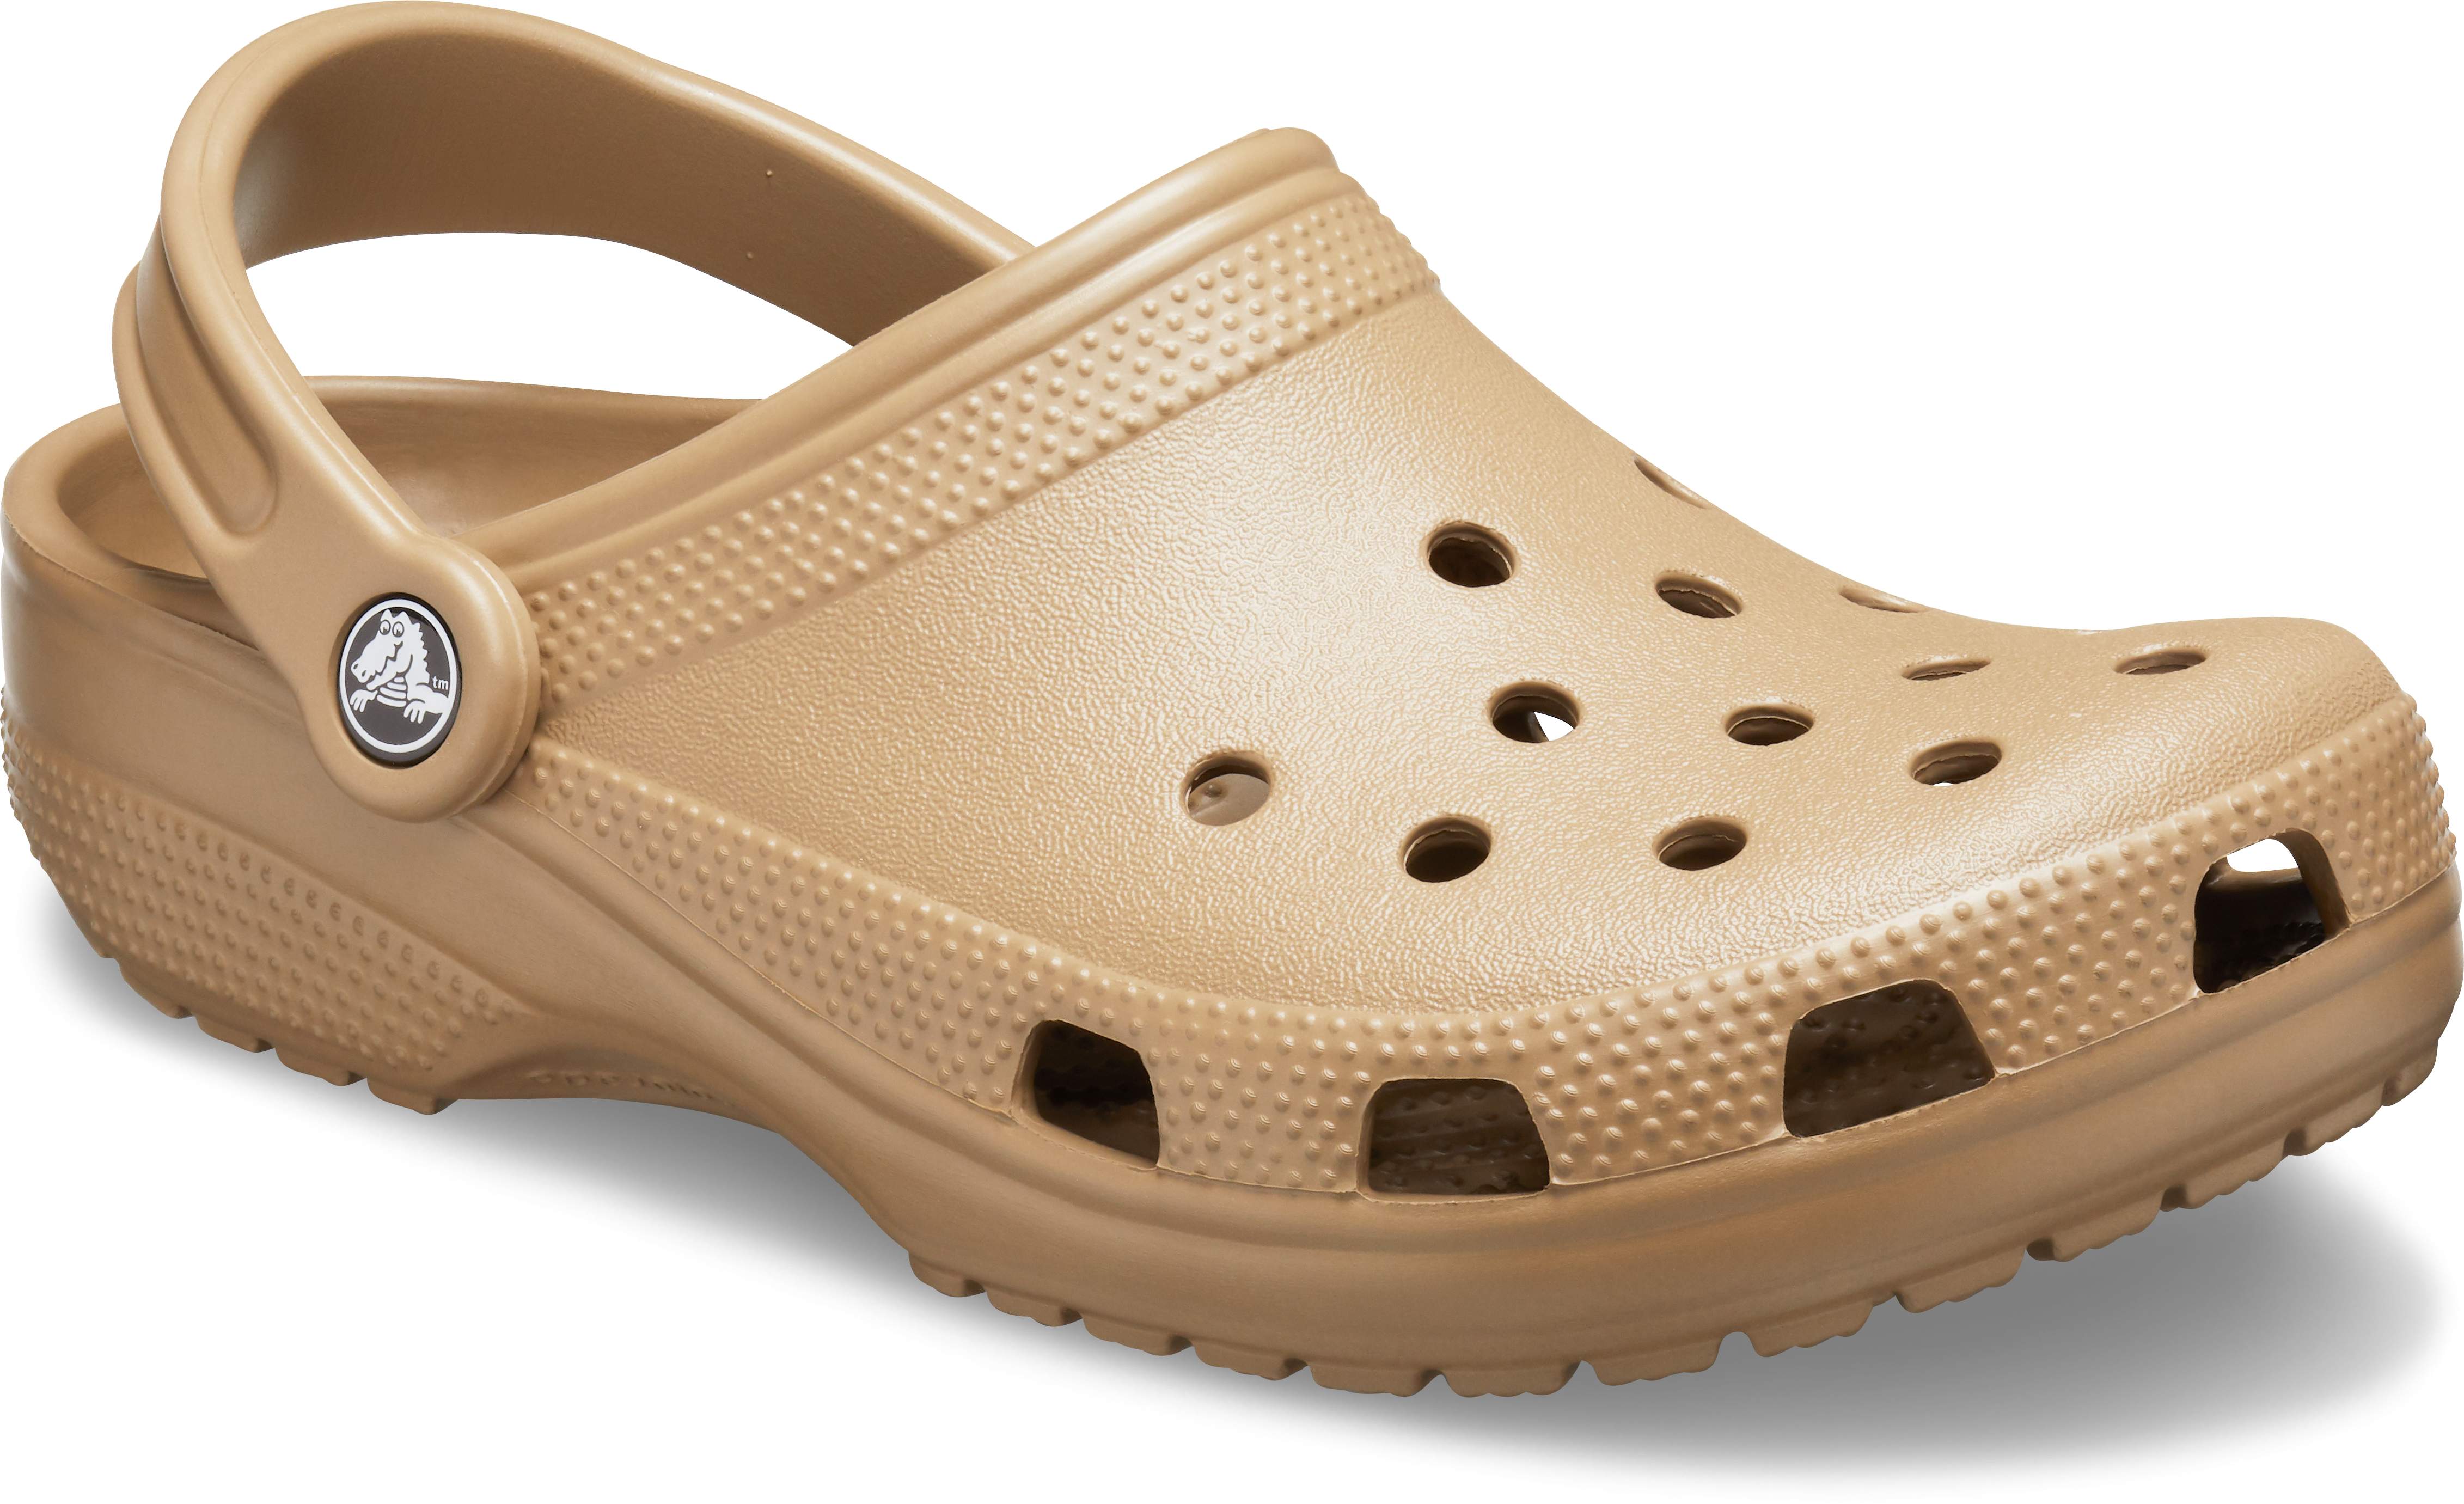 crocs shoes near me